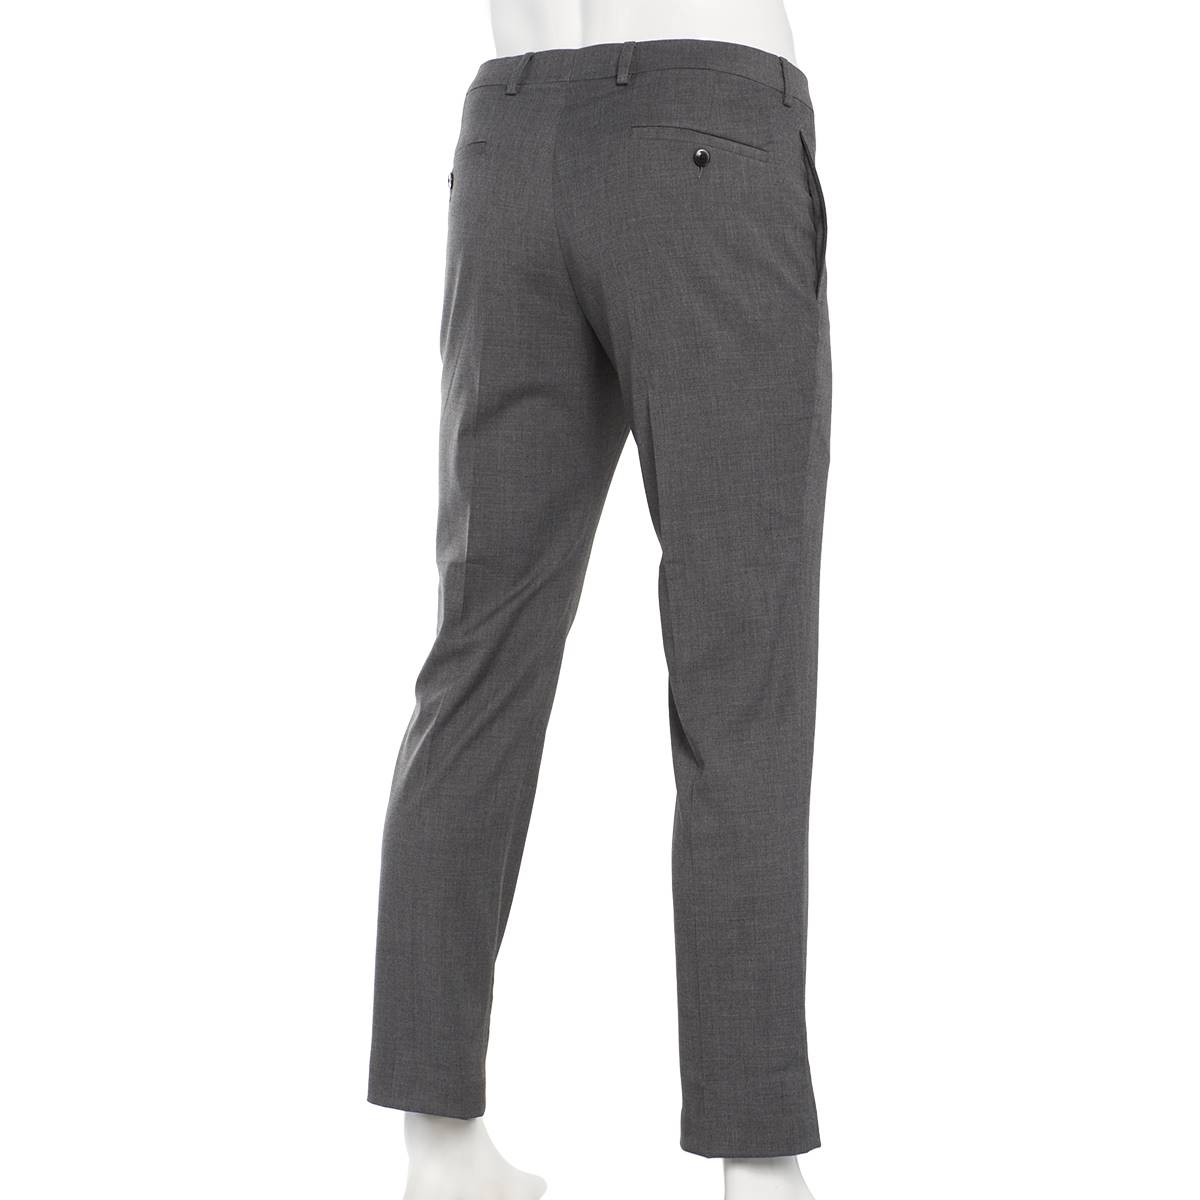 Mens Van Heusen(R) Pants - Sharkskin Grey